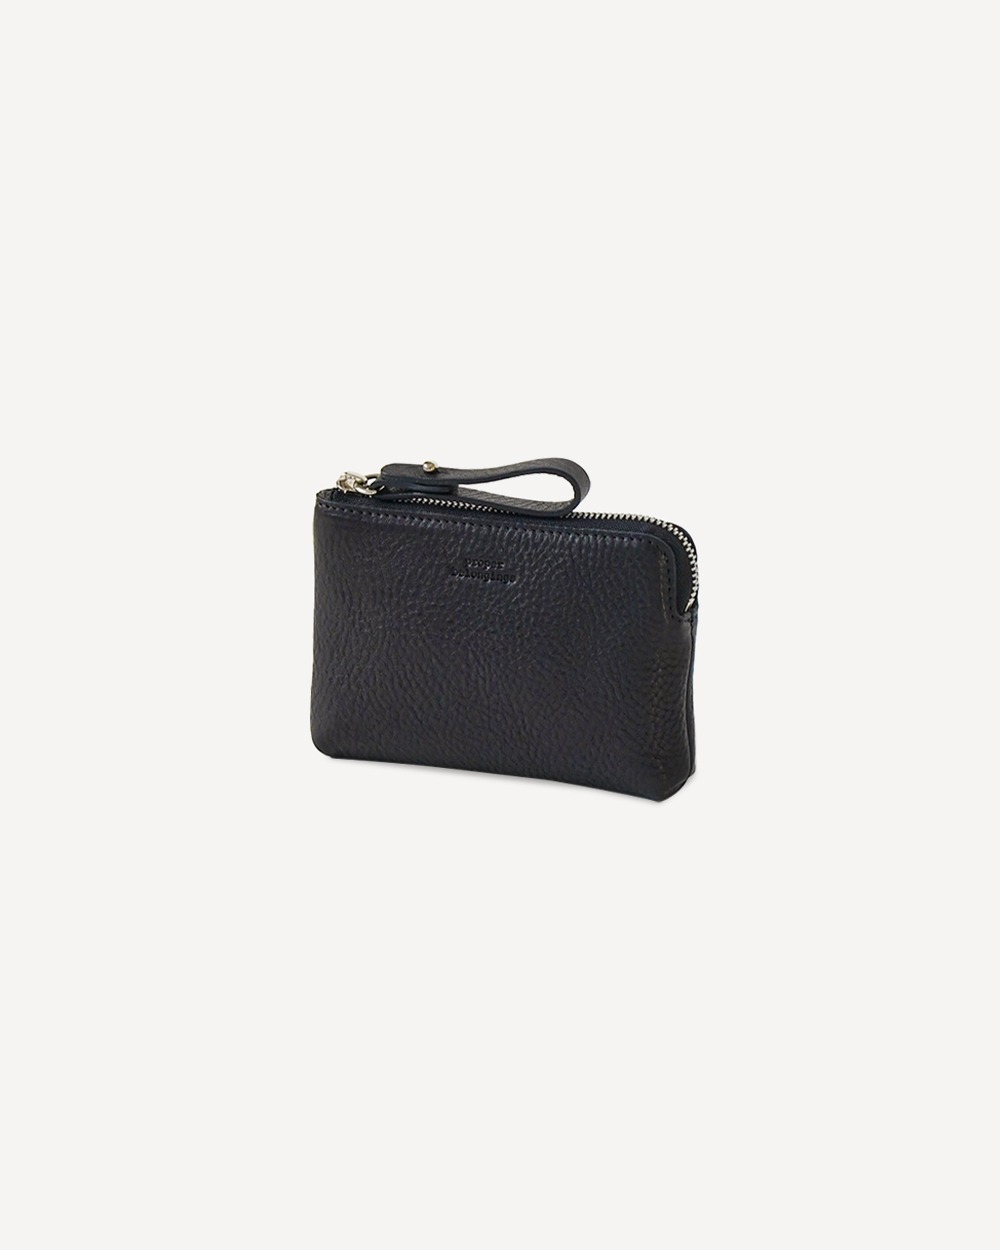 Proper Zipper Wallet / Long Black